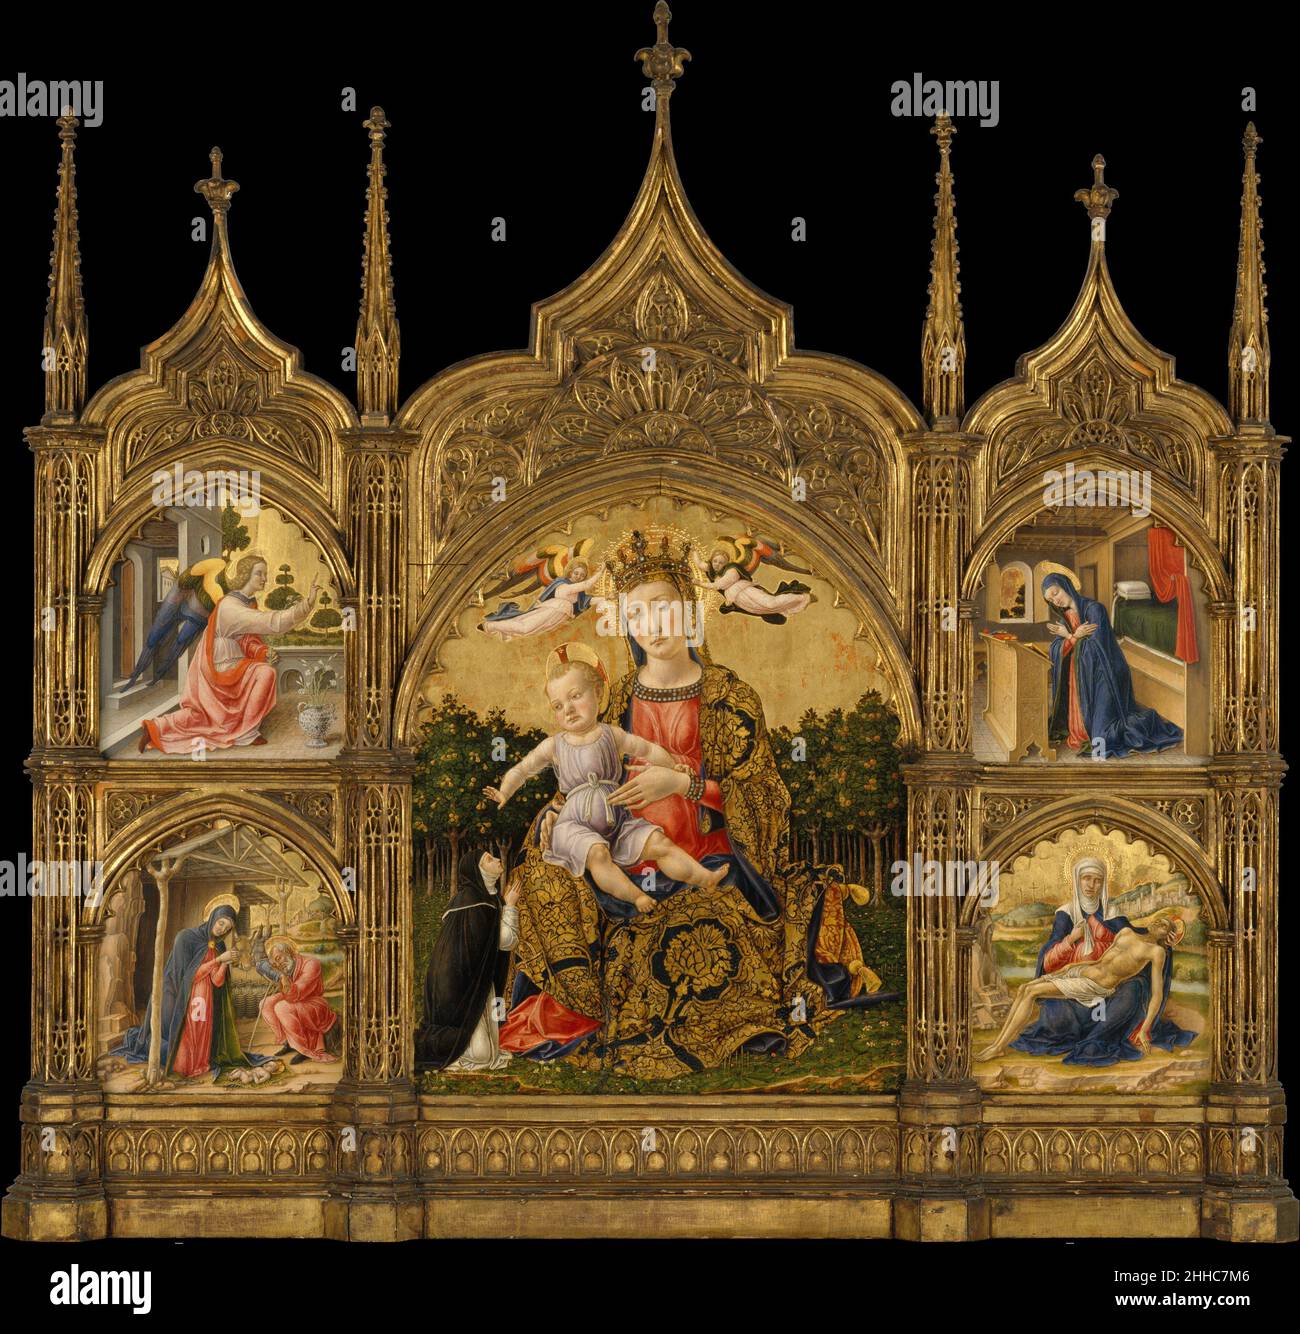 Pintores venecianos fotografías e imágenes de alta resolución - Alamy